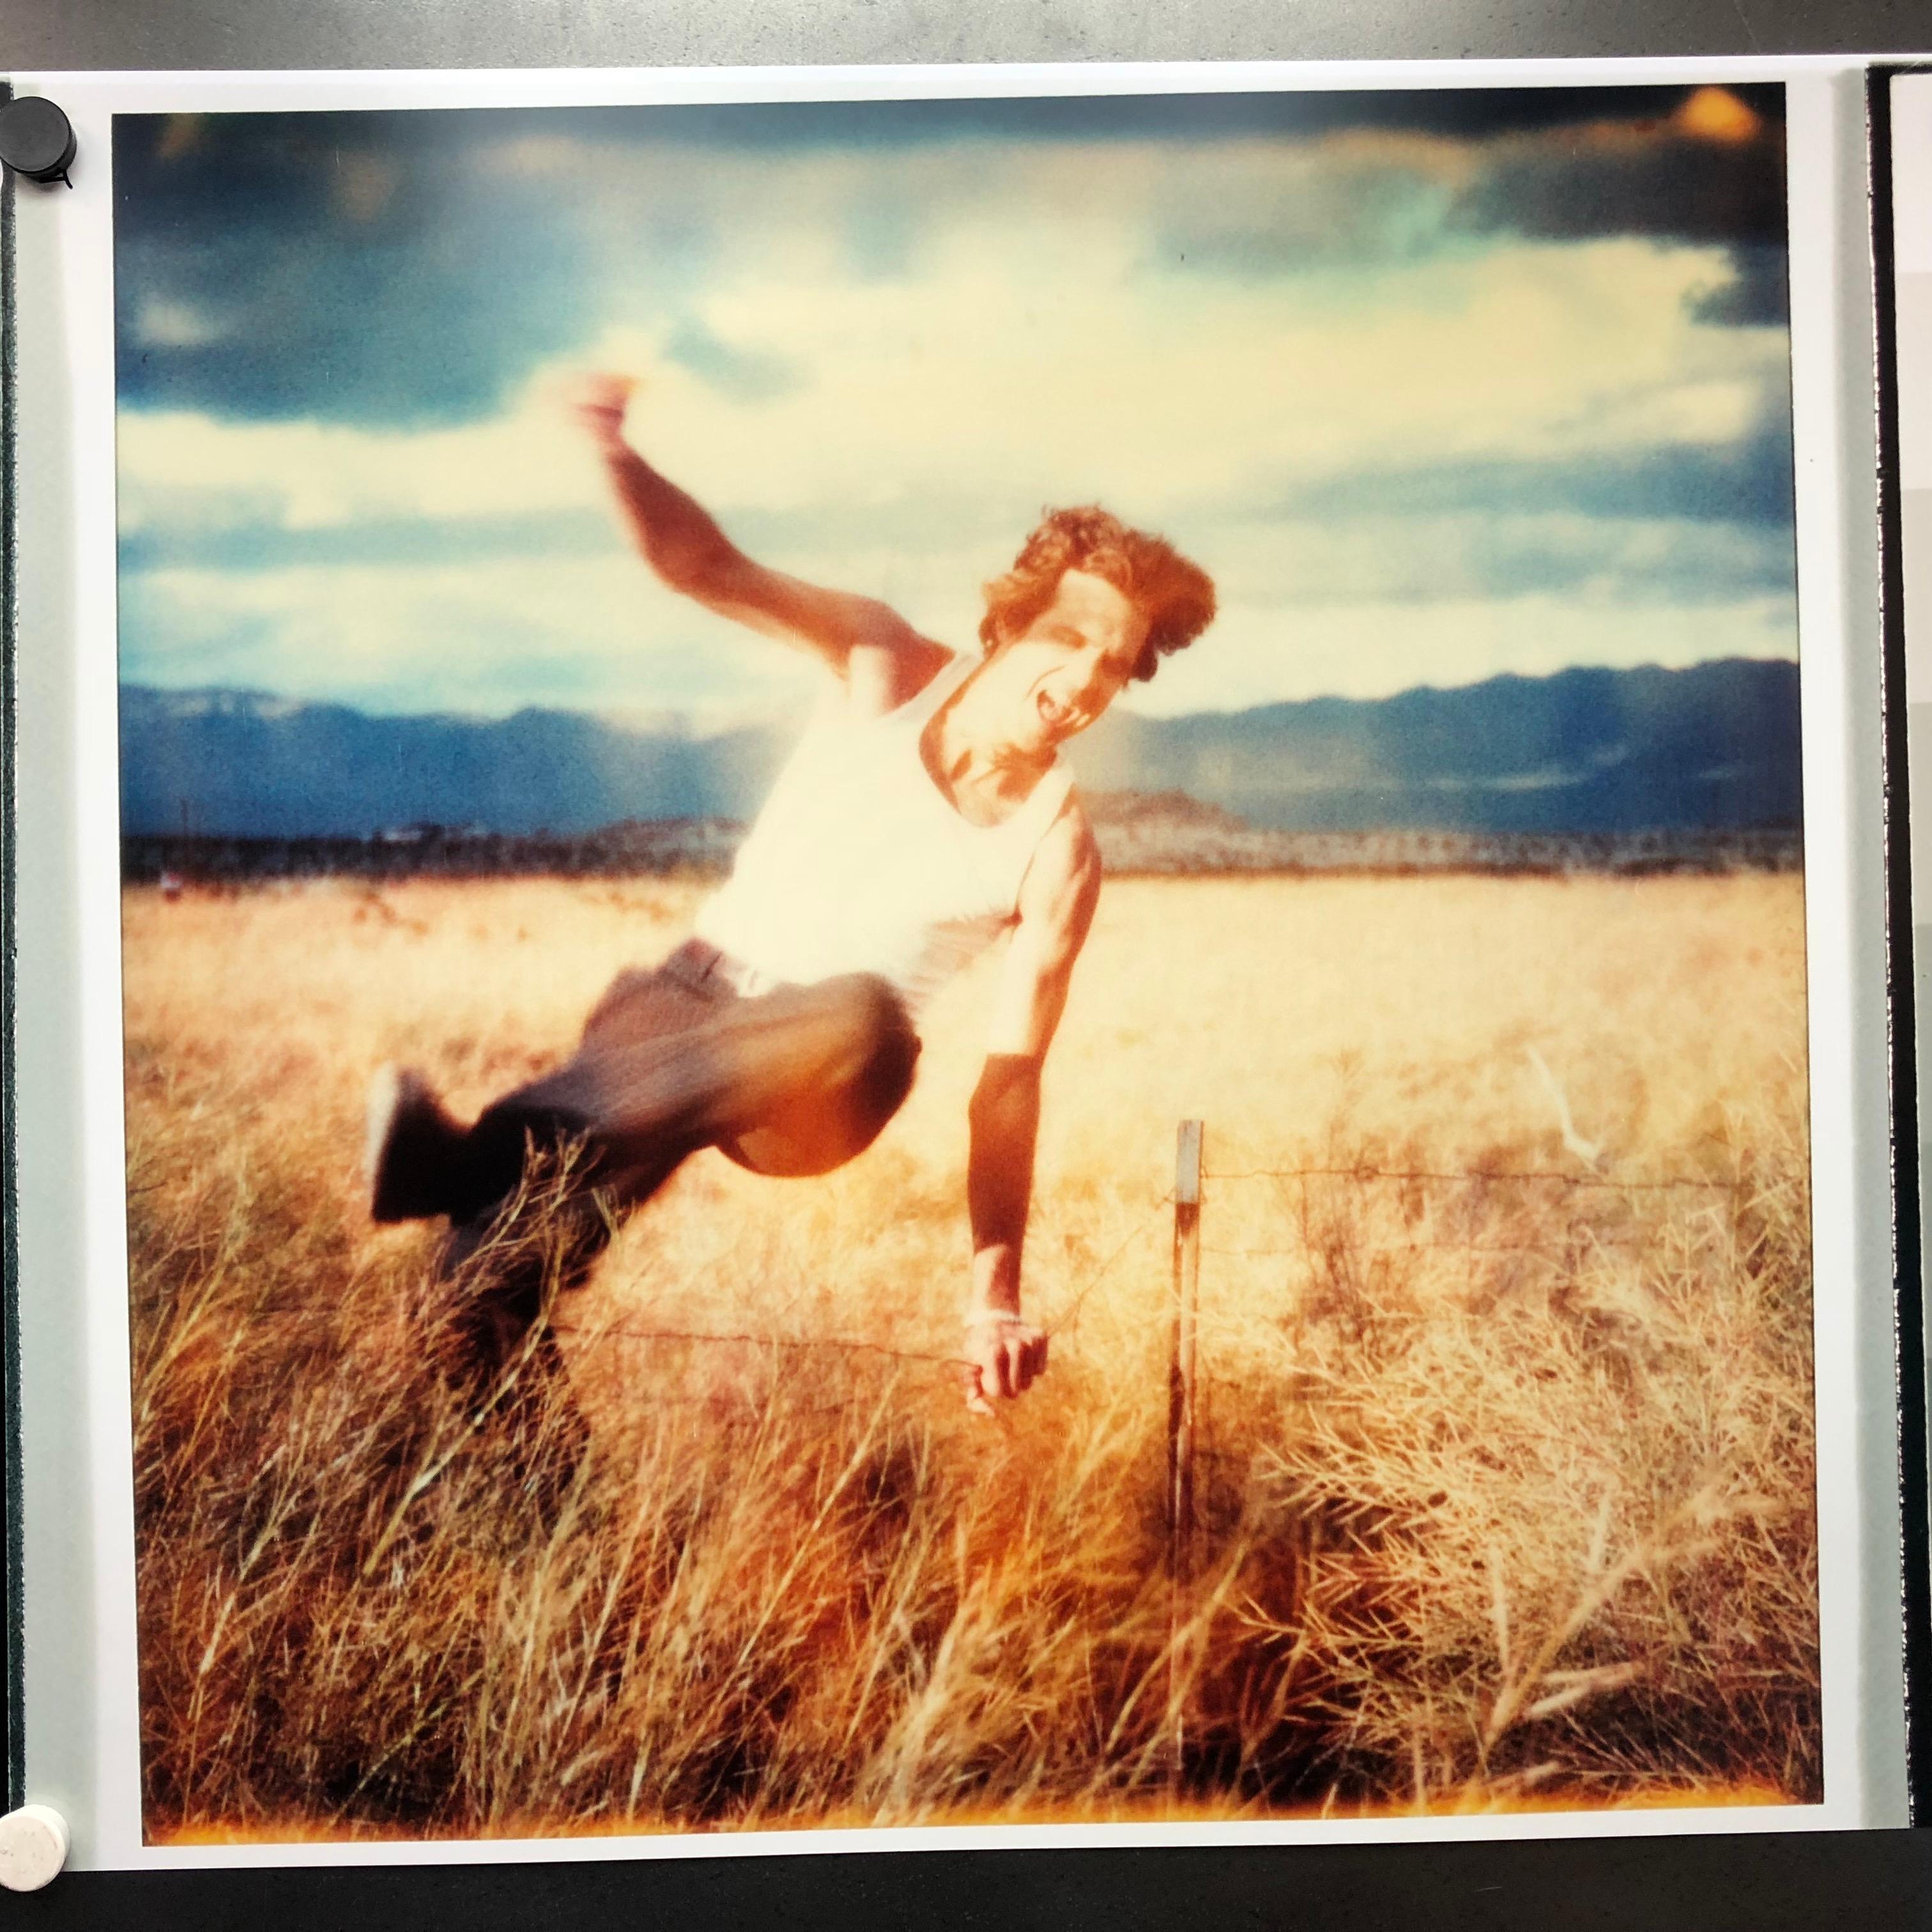 Stefanie Schneider Figurative Photograph - Field of Dreams (Sidewinder), analog, 80x78cm, Edition 2/5